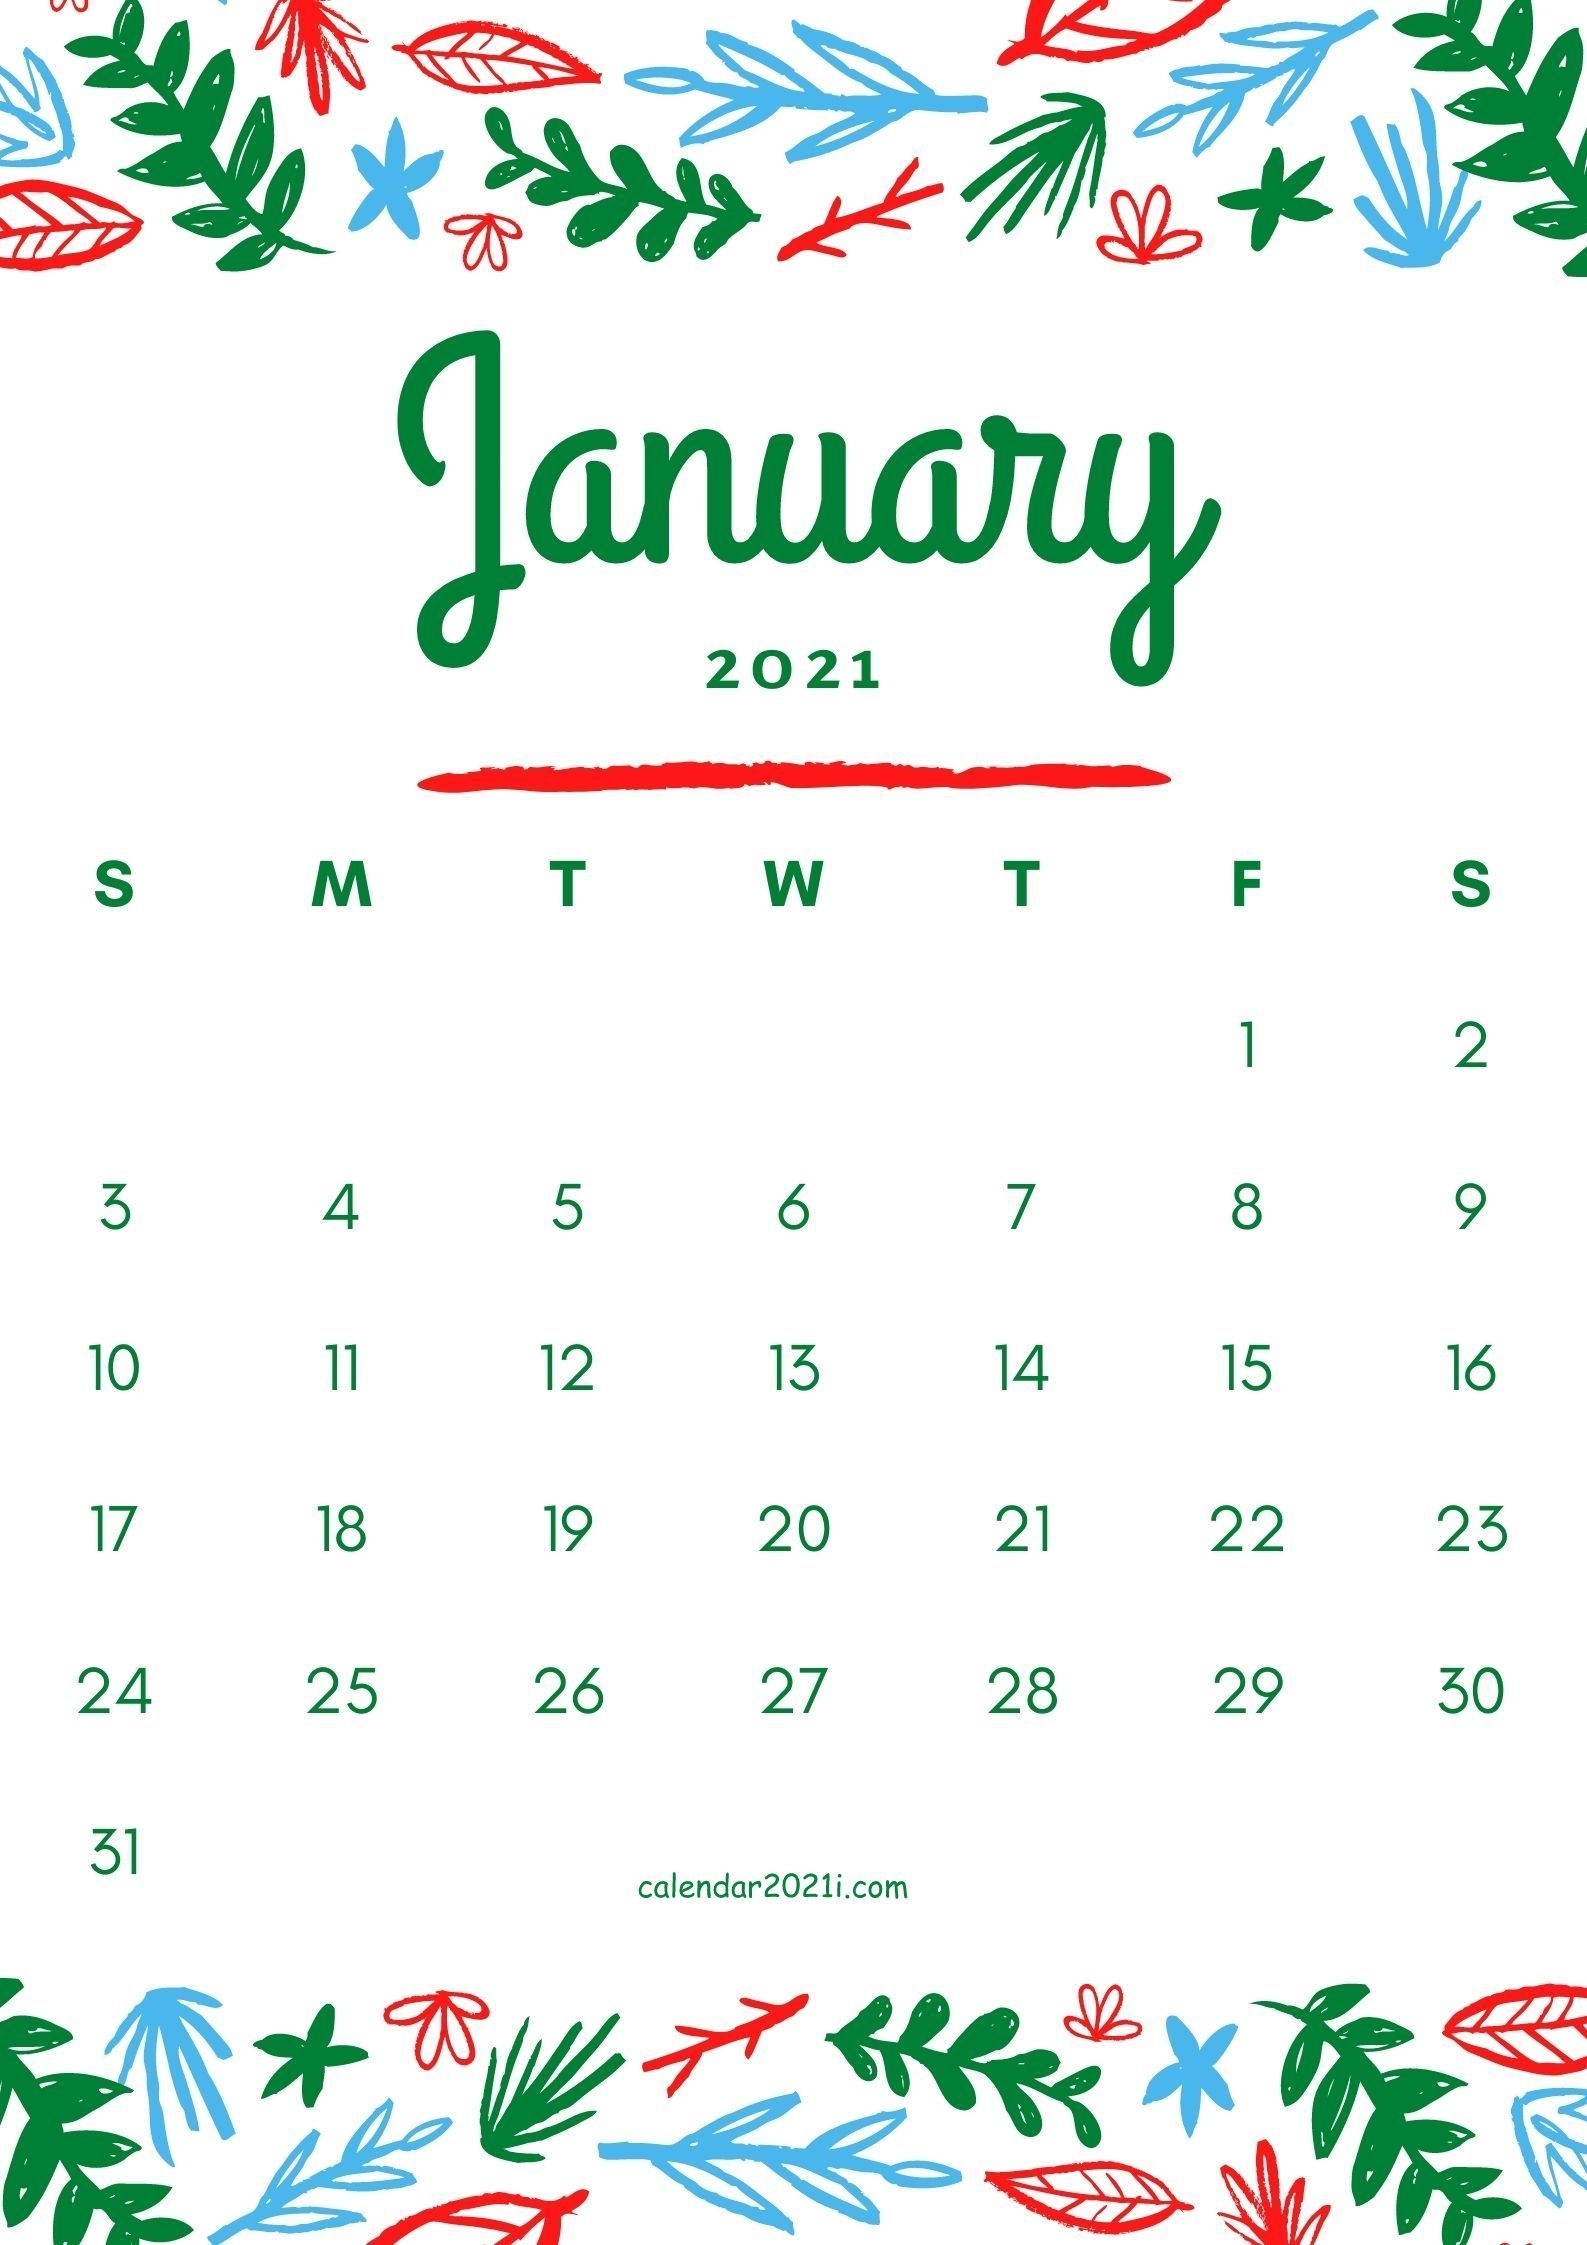 January 2021 Floral Calendar Printable Template Free Download In 2020 | Calendar Printables December 2021 Calendar Floral